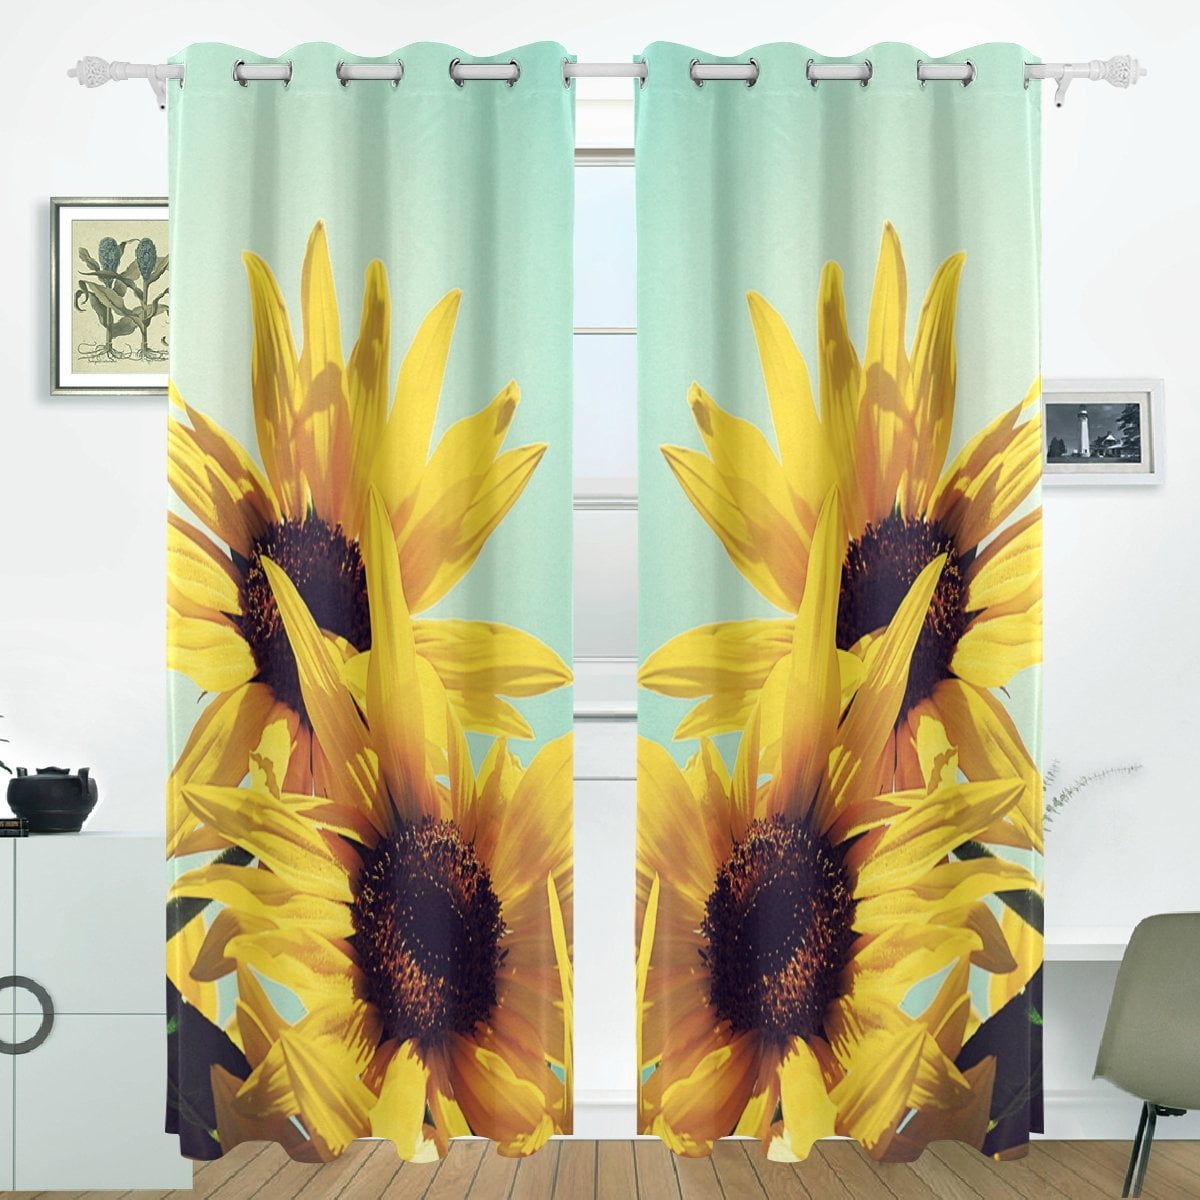 3D Curtain Blockout Drapes Fabric Sunflower Flower Field Window Photo Print 